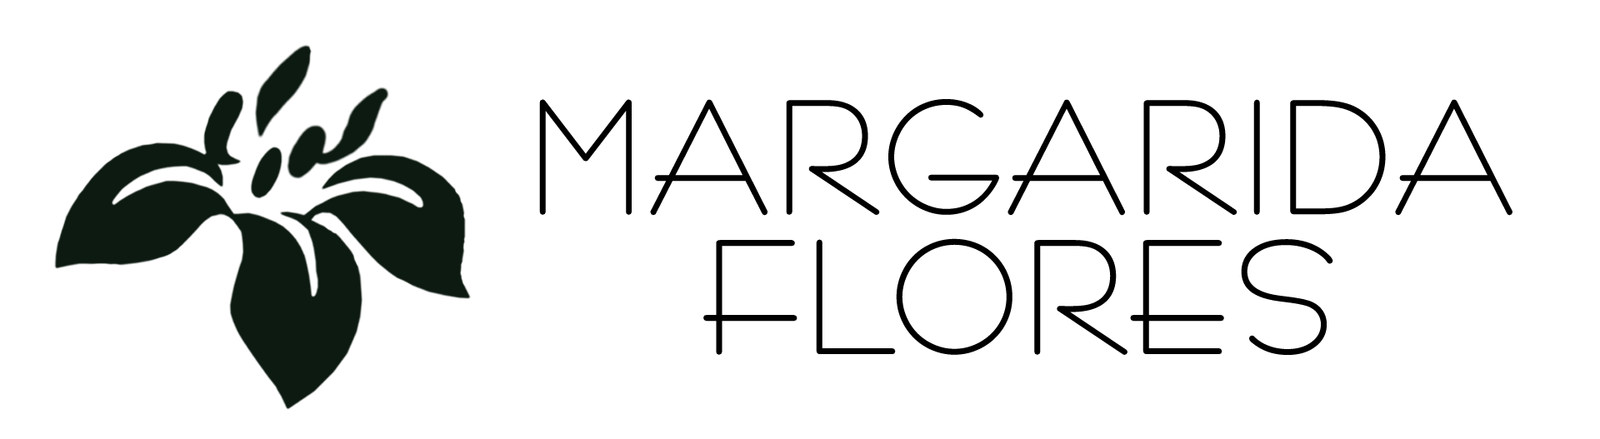 logotipo margarida flores